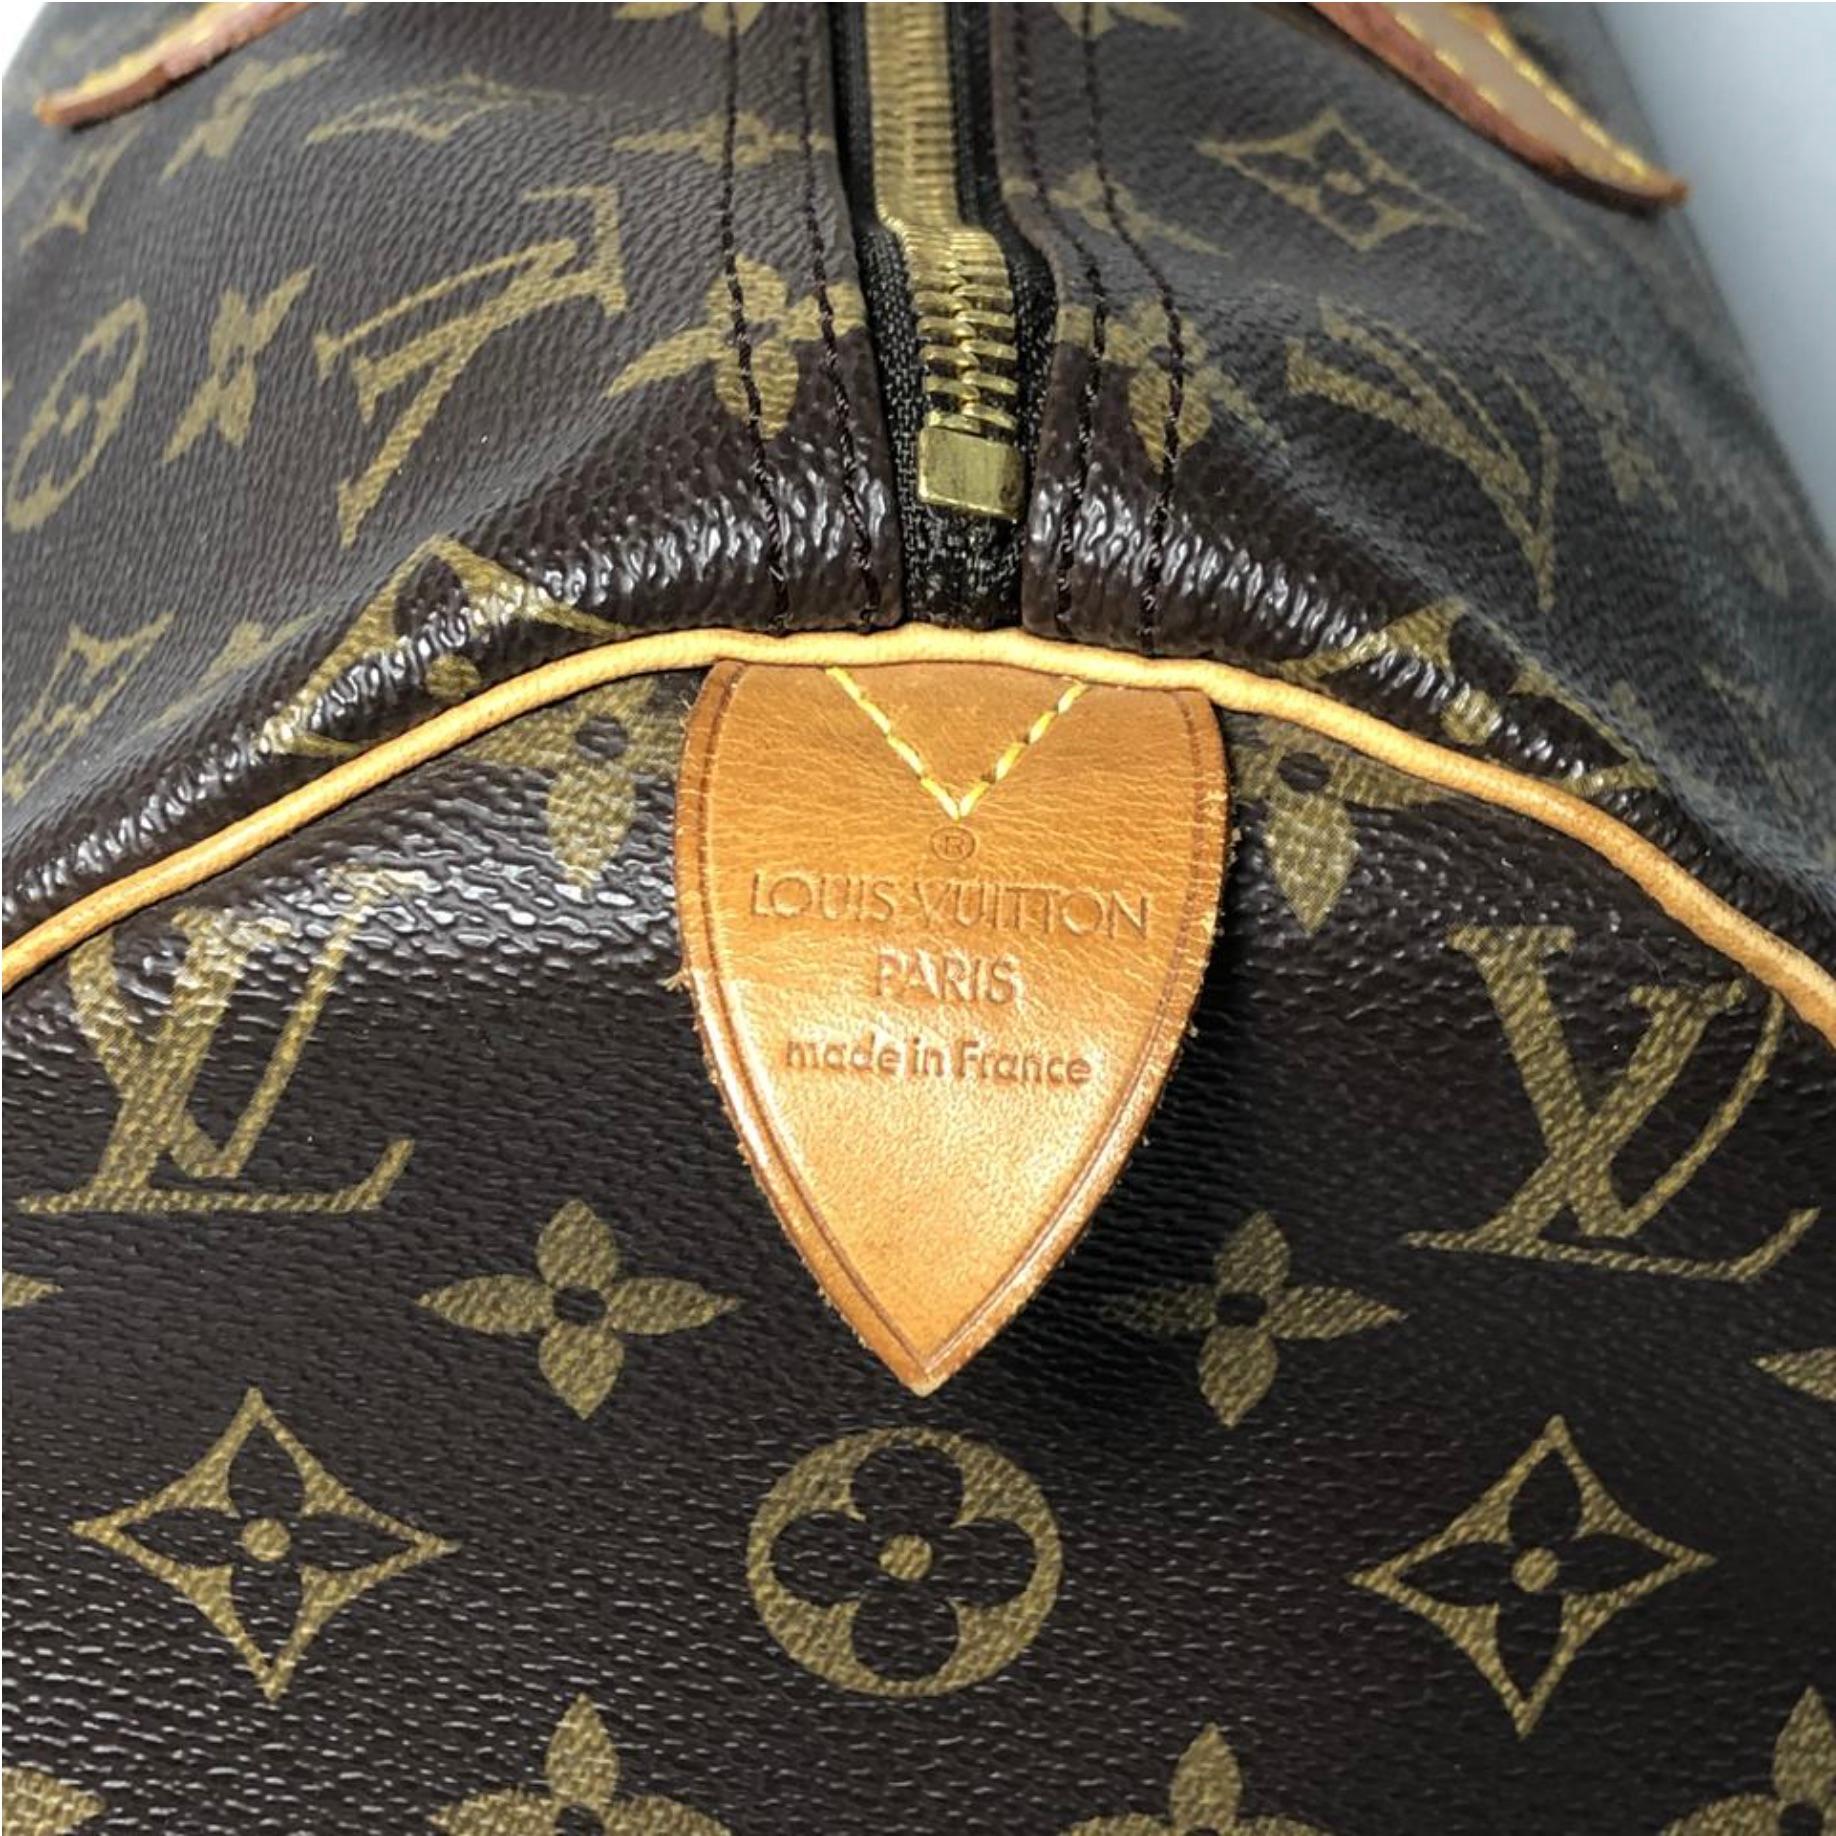 Louis Vuitton Monogram Speedy 40 Satchel Top Handle Handbag In Excellent Condition For Sale In Saint Charles, IL